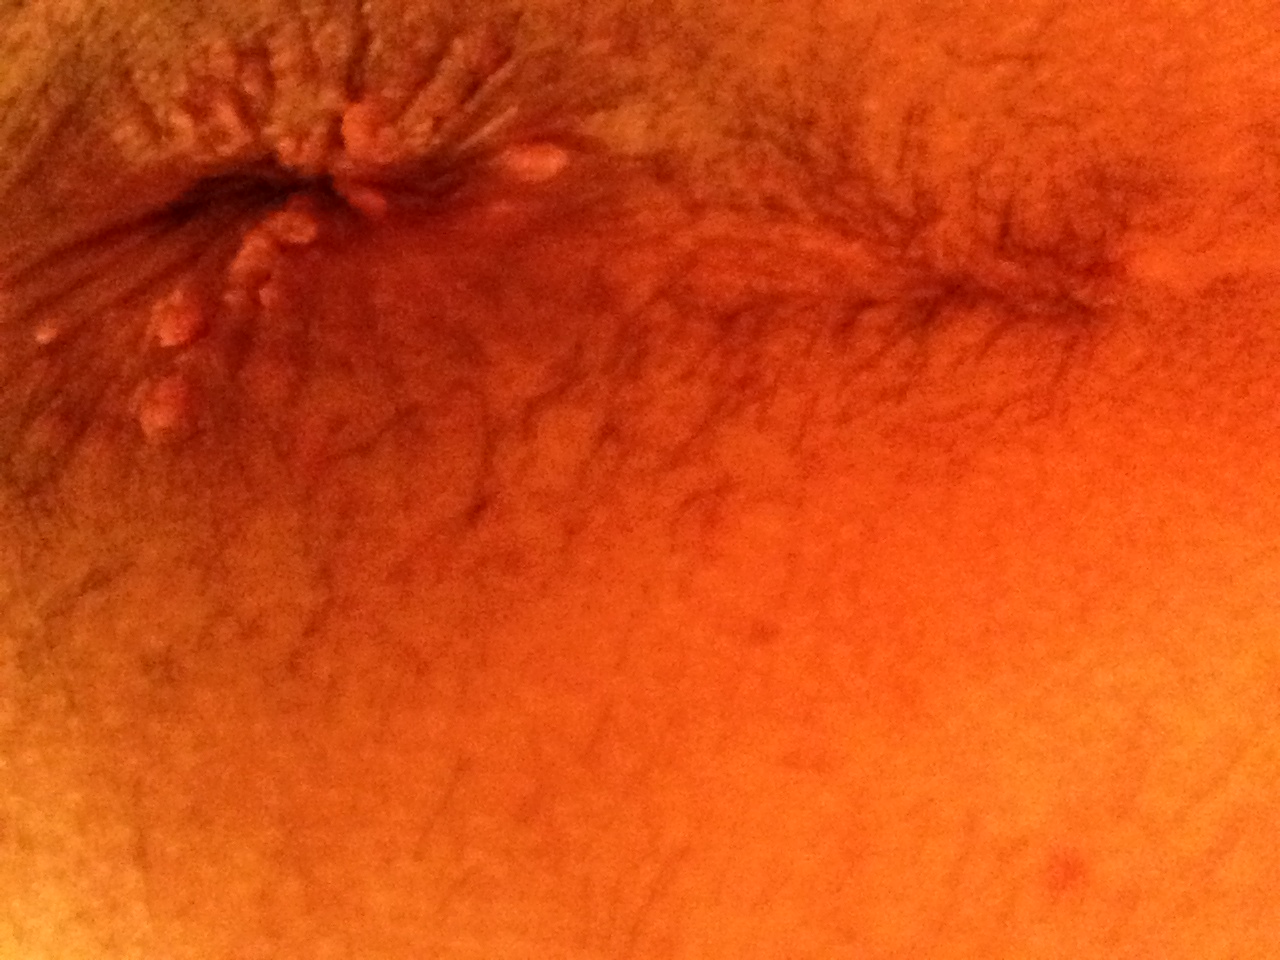 Painful lump near anus image